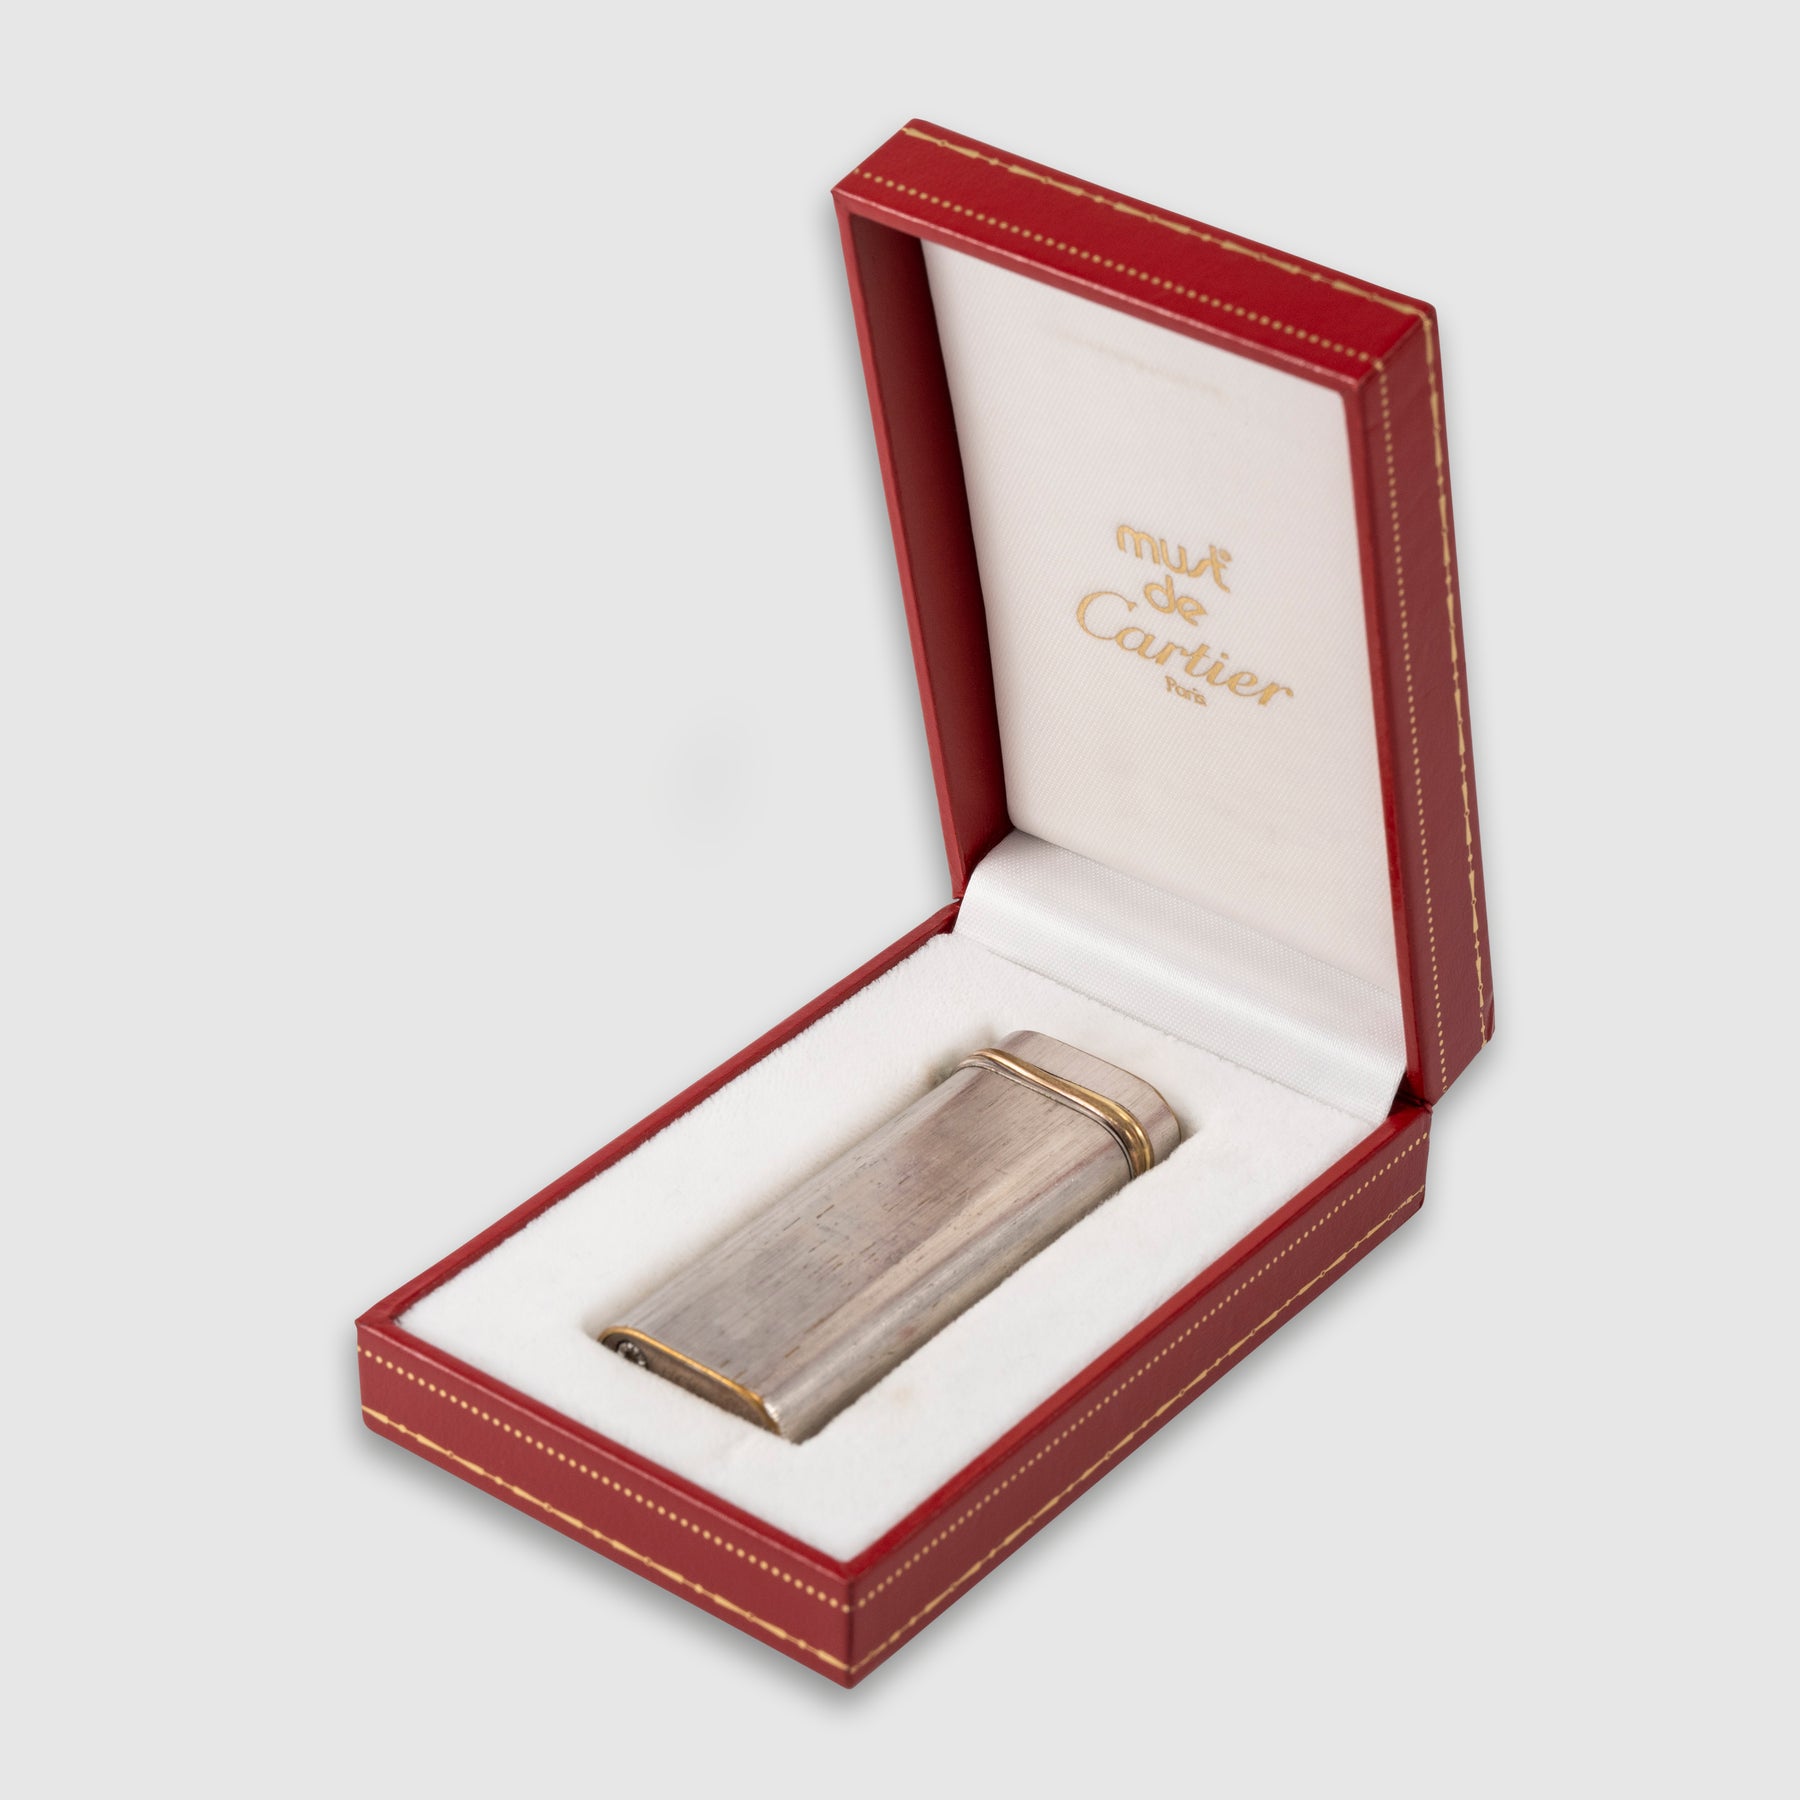 Vintage Cartier Lighter with Presentation Box, 1980s